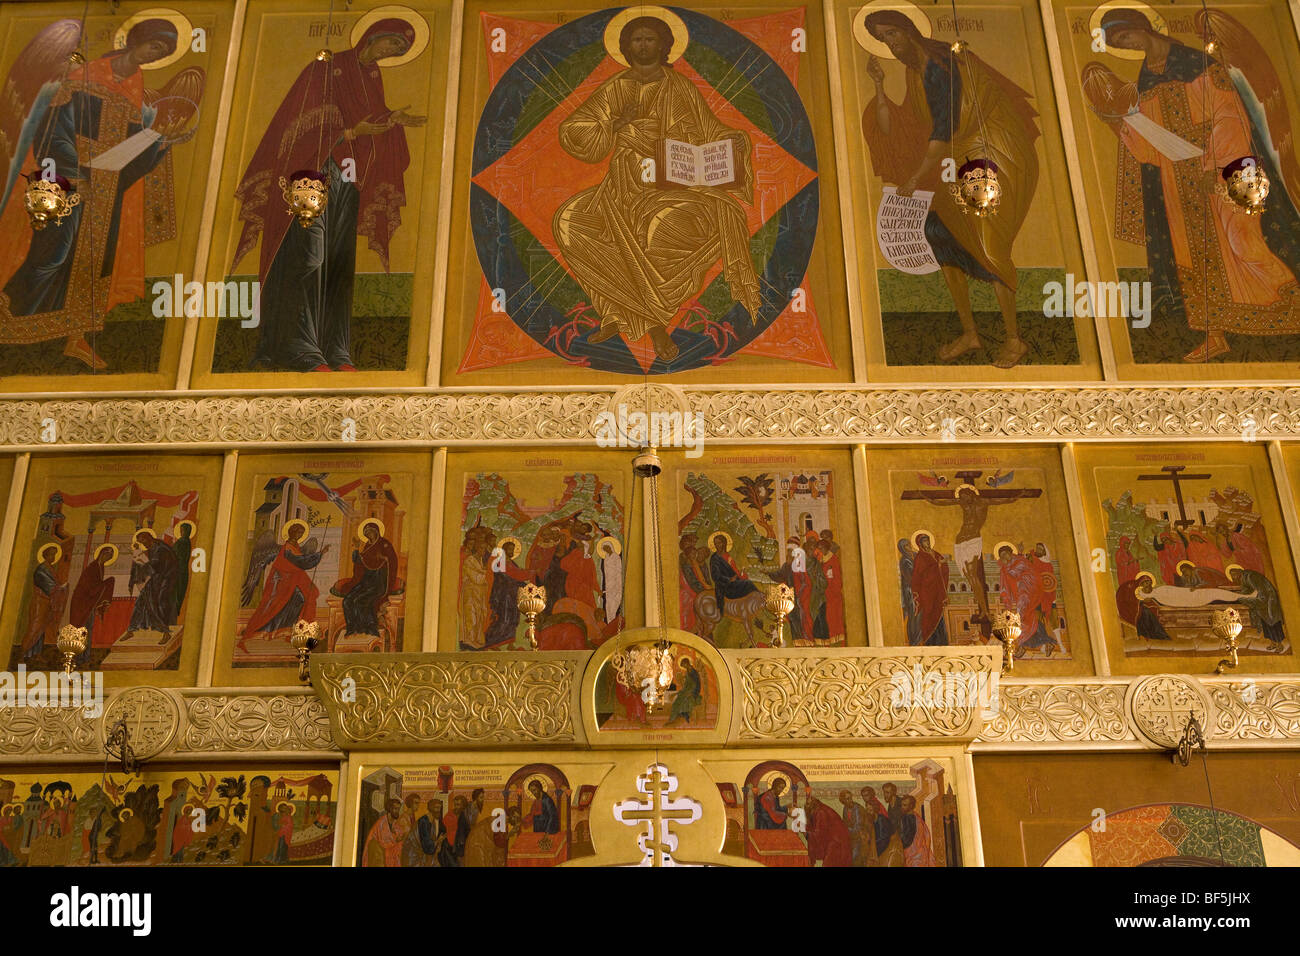 Wall inside Russian Orthodox church, Yekaterinburg, Russia Stock Photo